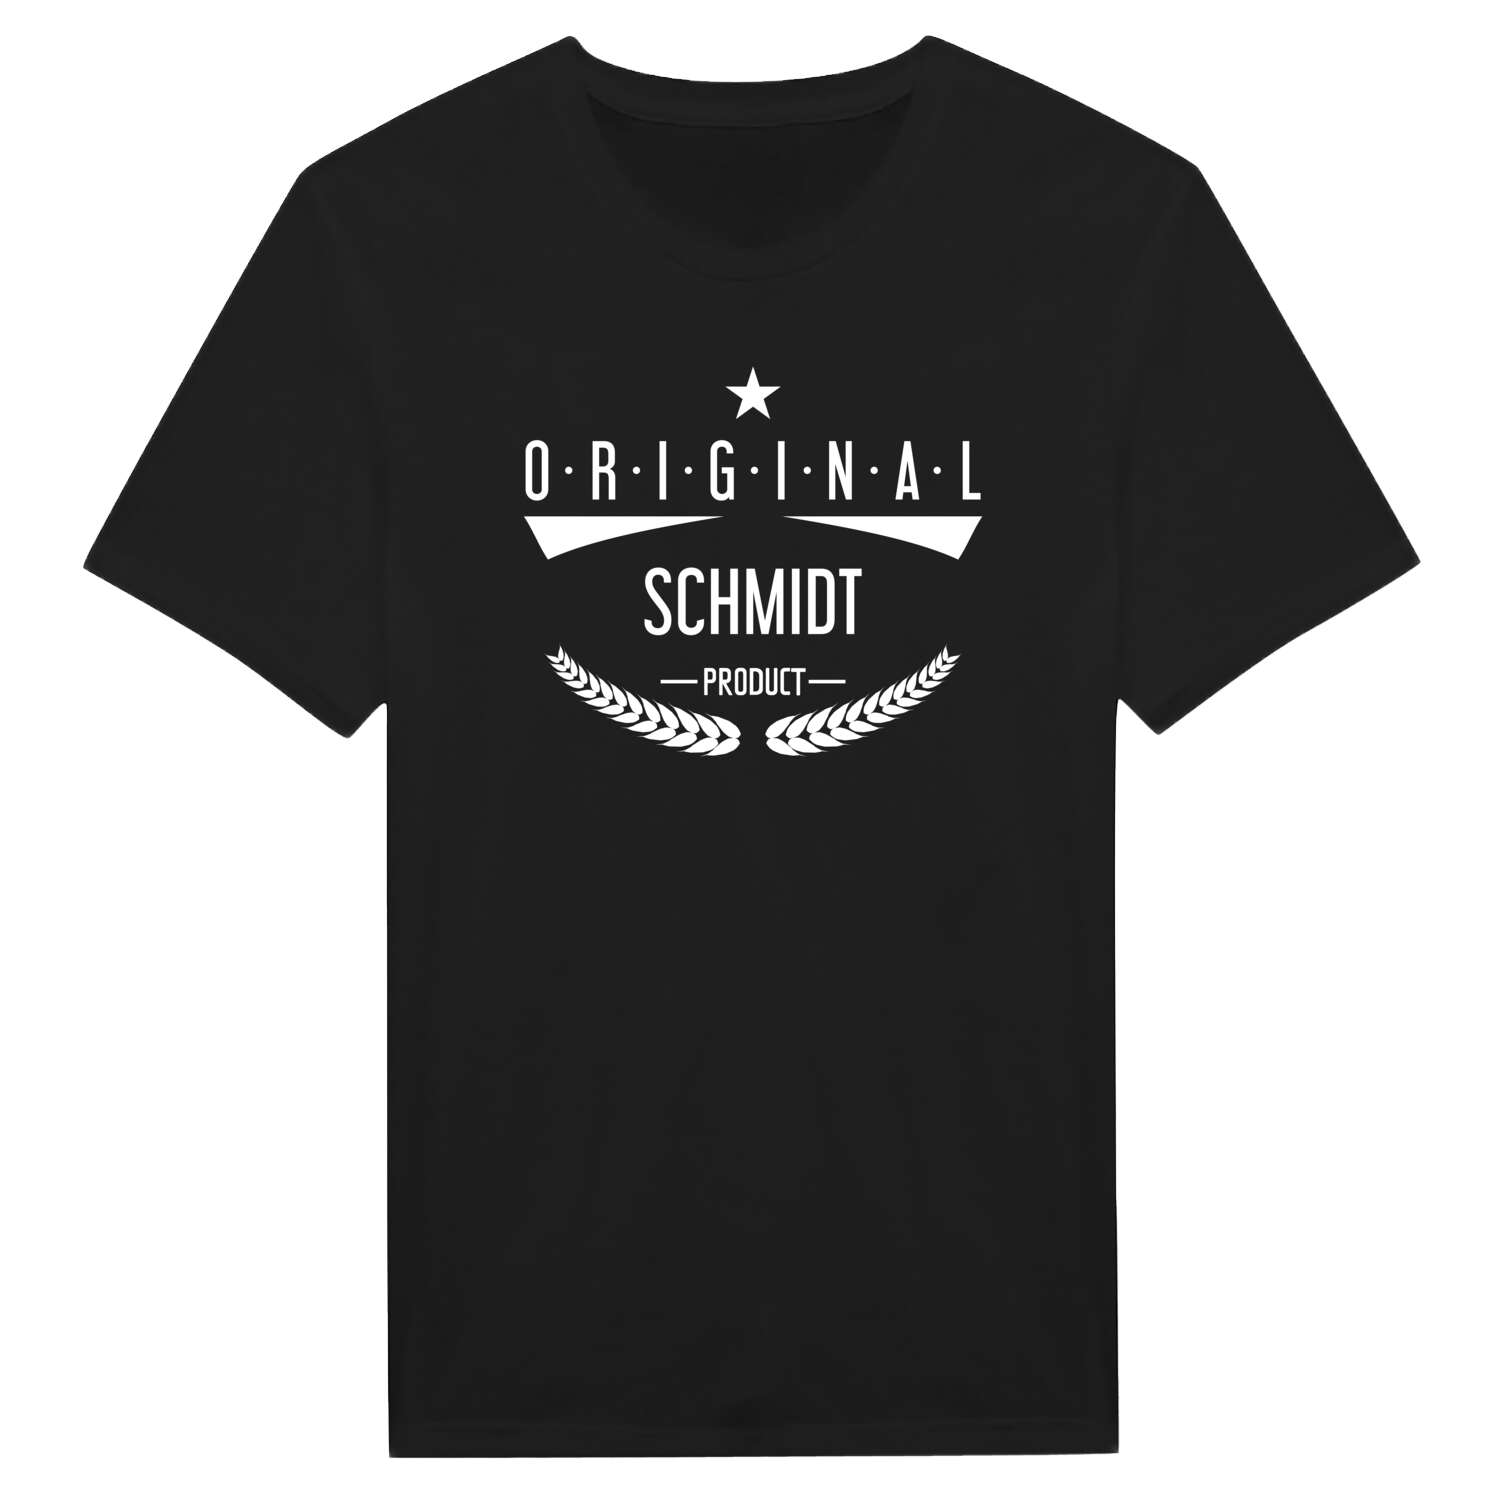 Schmidt T-Shirt »Original Product«